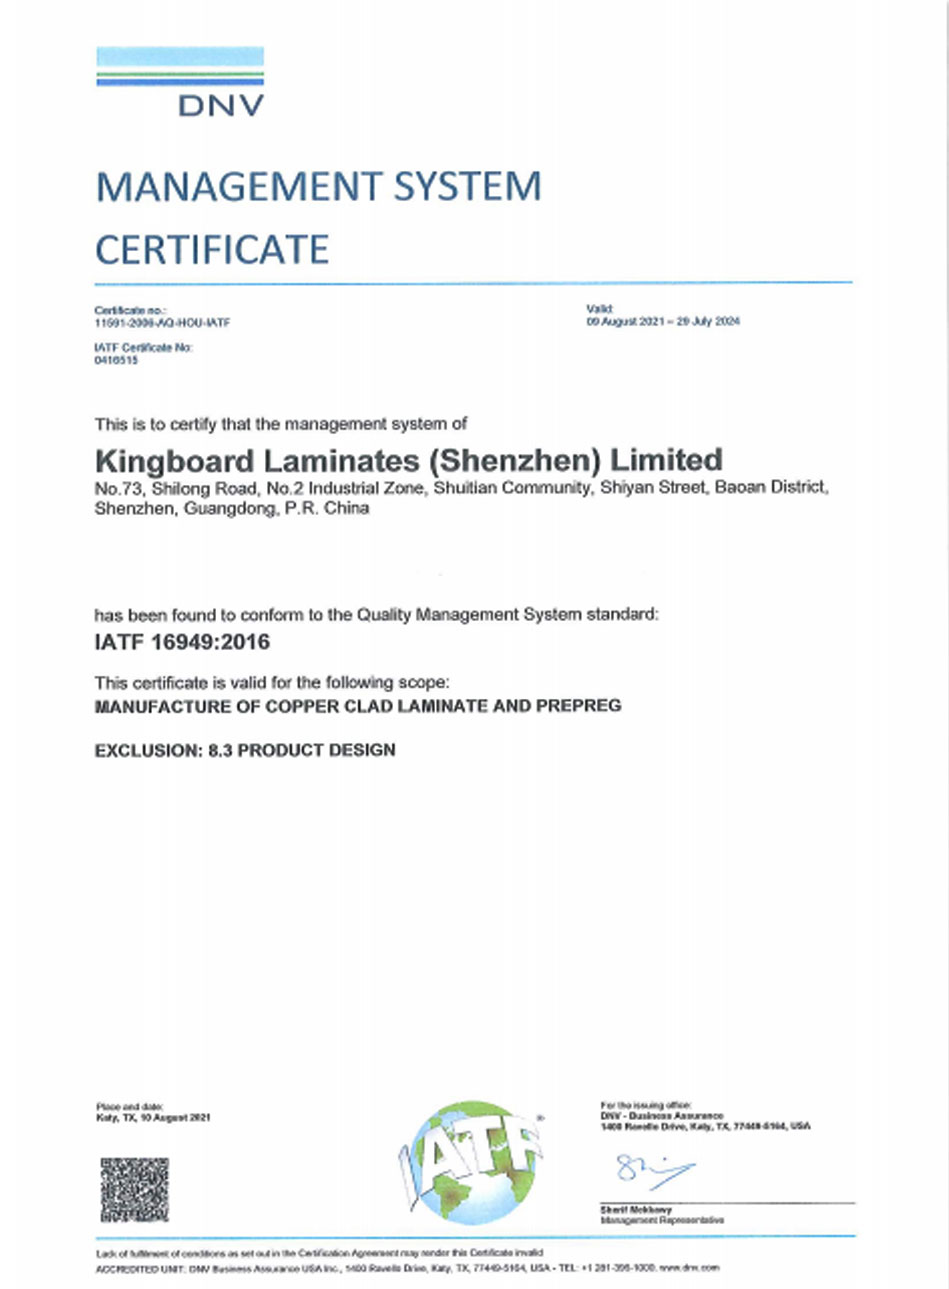 IATF 16949 Certificate